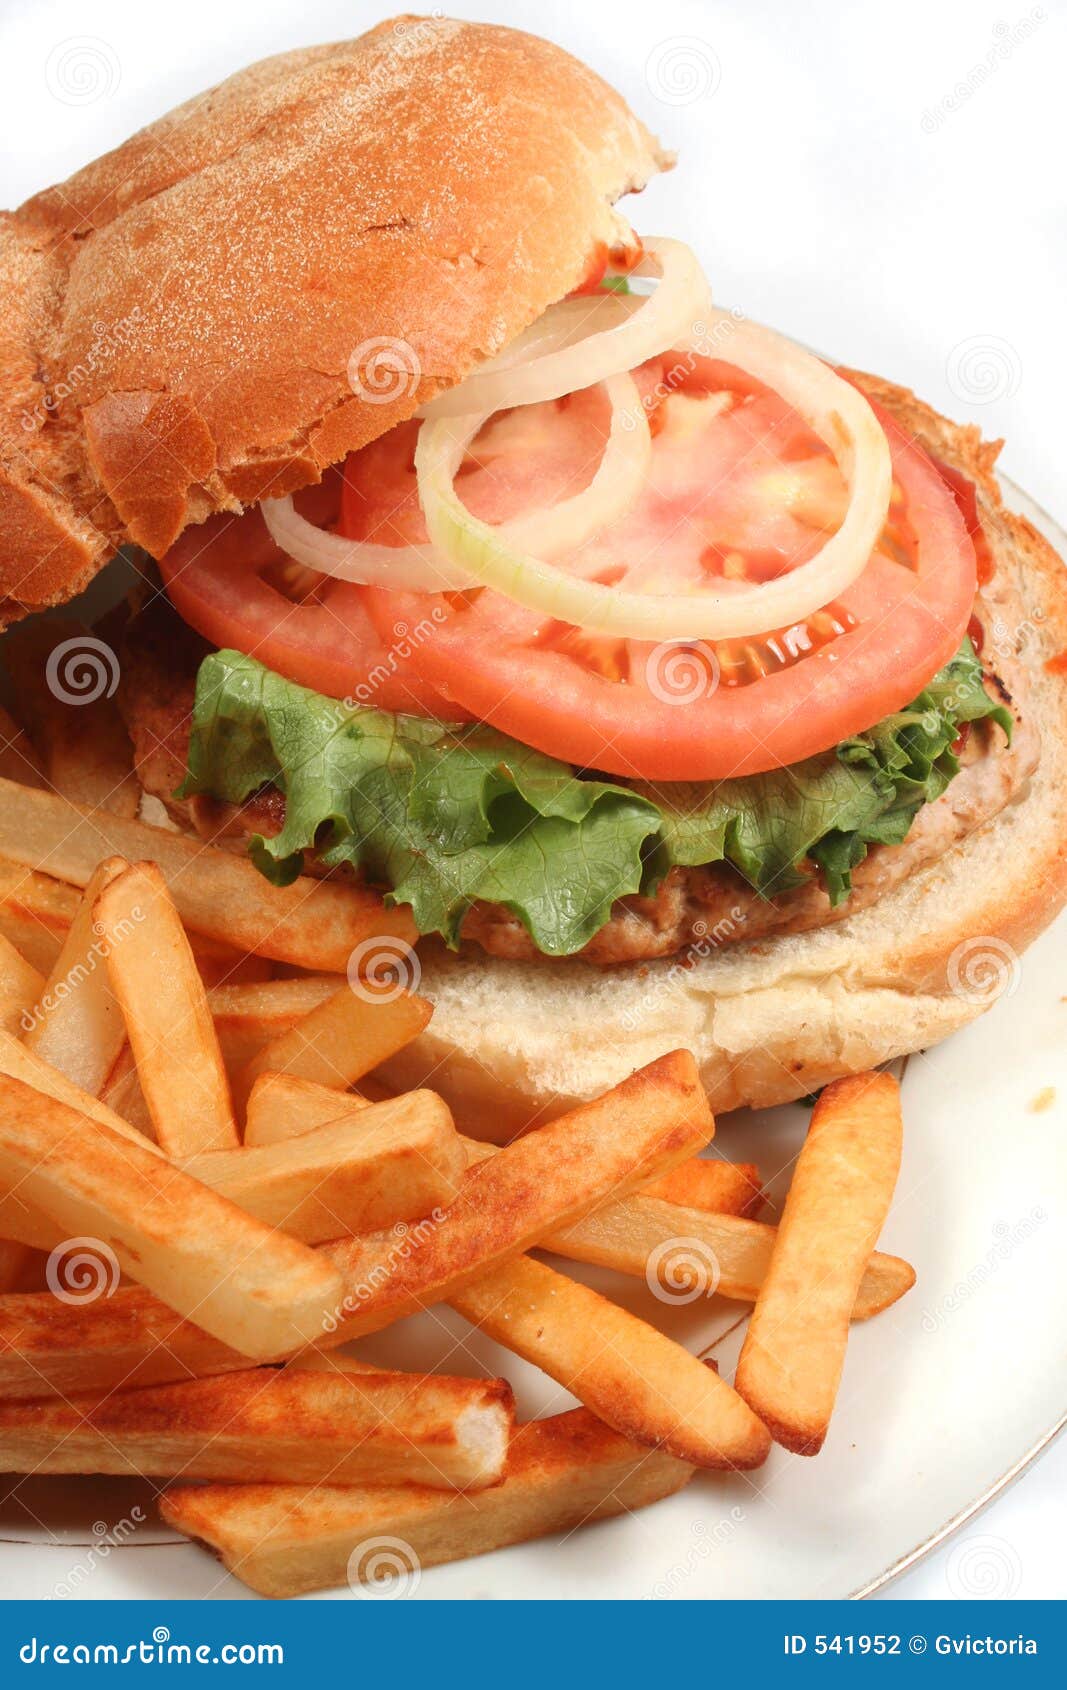 Turkey burger stock photo. Image of health, burger, hamburger - 541952